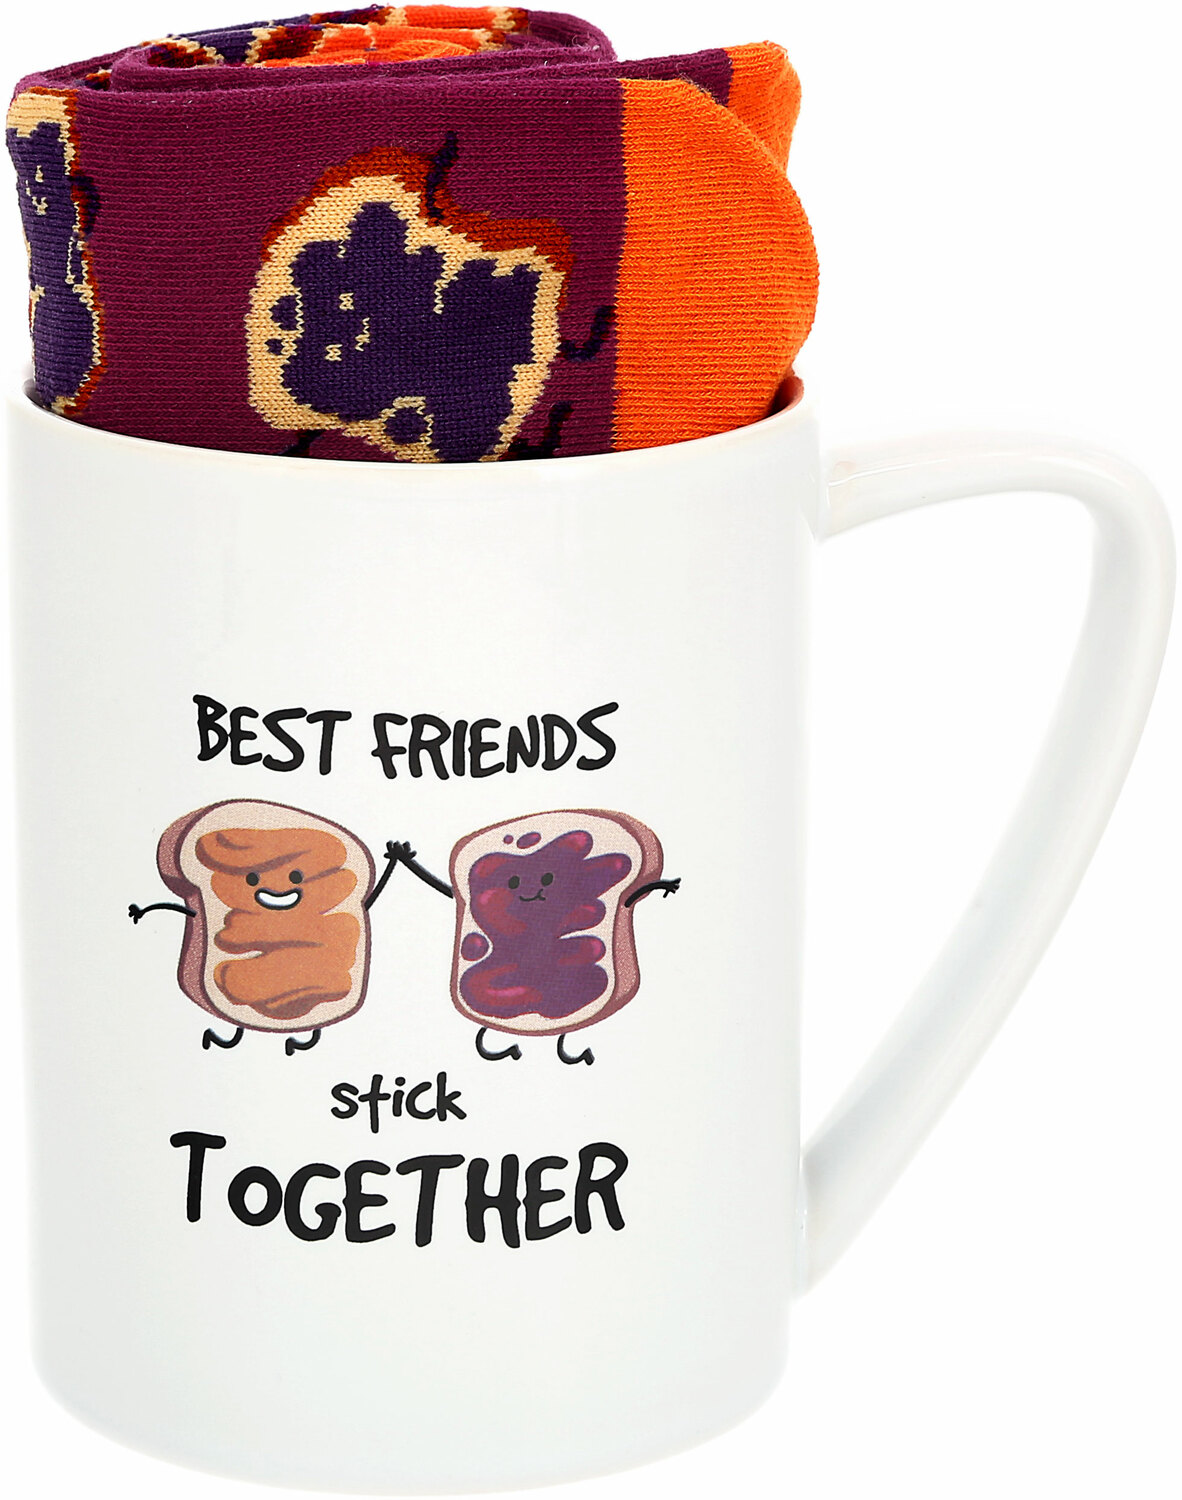 Stick Together by Late Night Snacks - Stick Together - 18 oz Mug and Sock Set